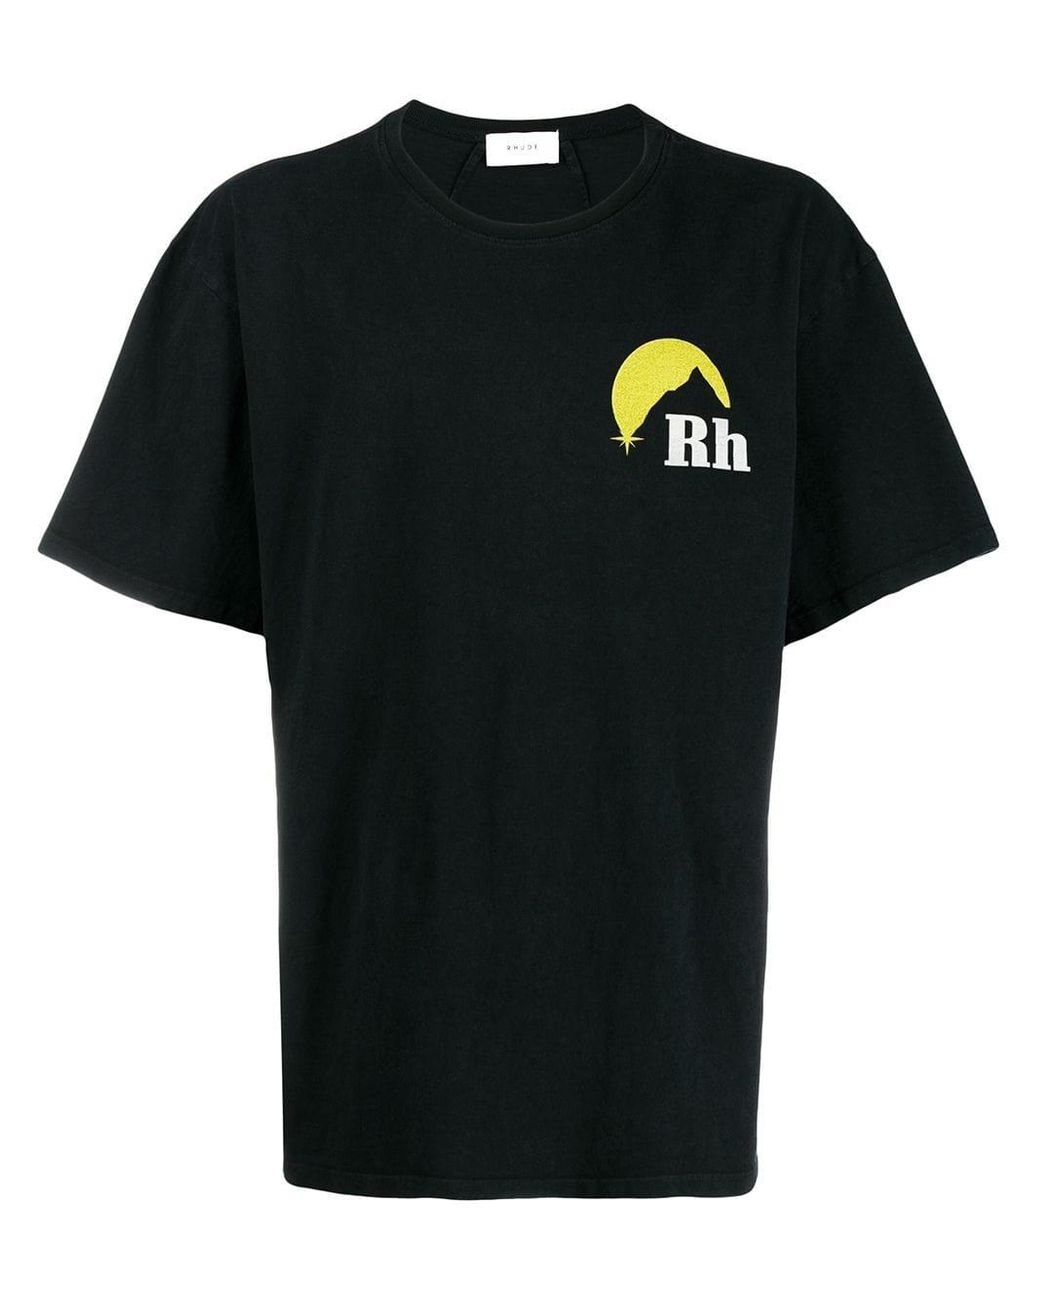 Rhude Cotton Logo T-shirt in Black for Men - Save 57% - Lyst